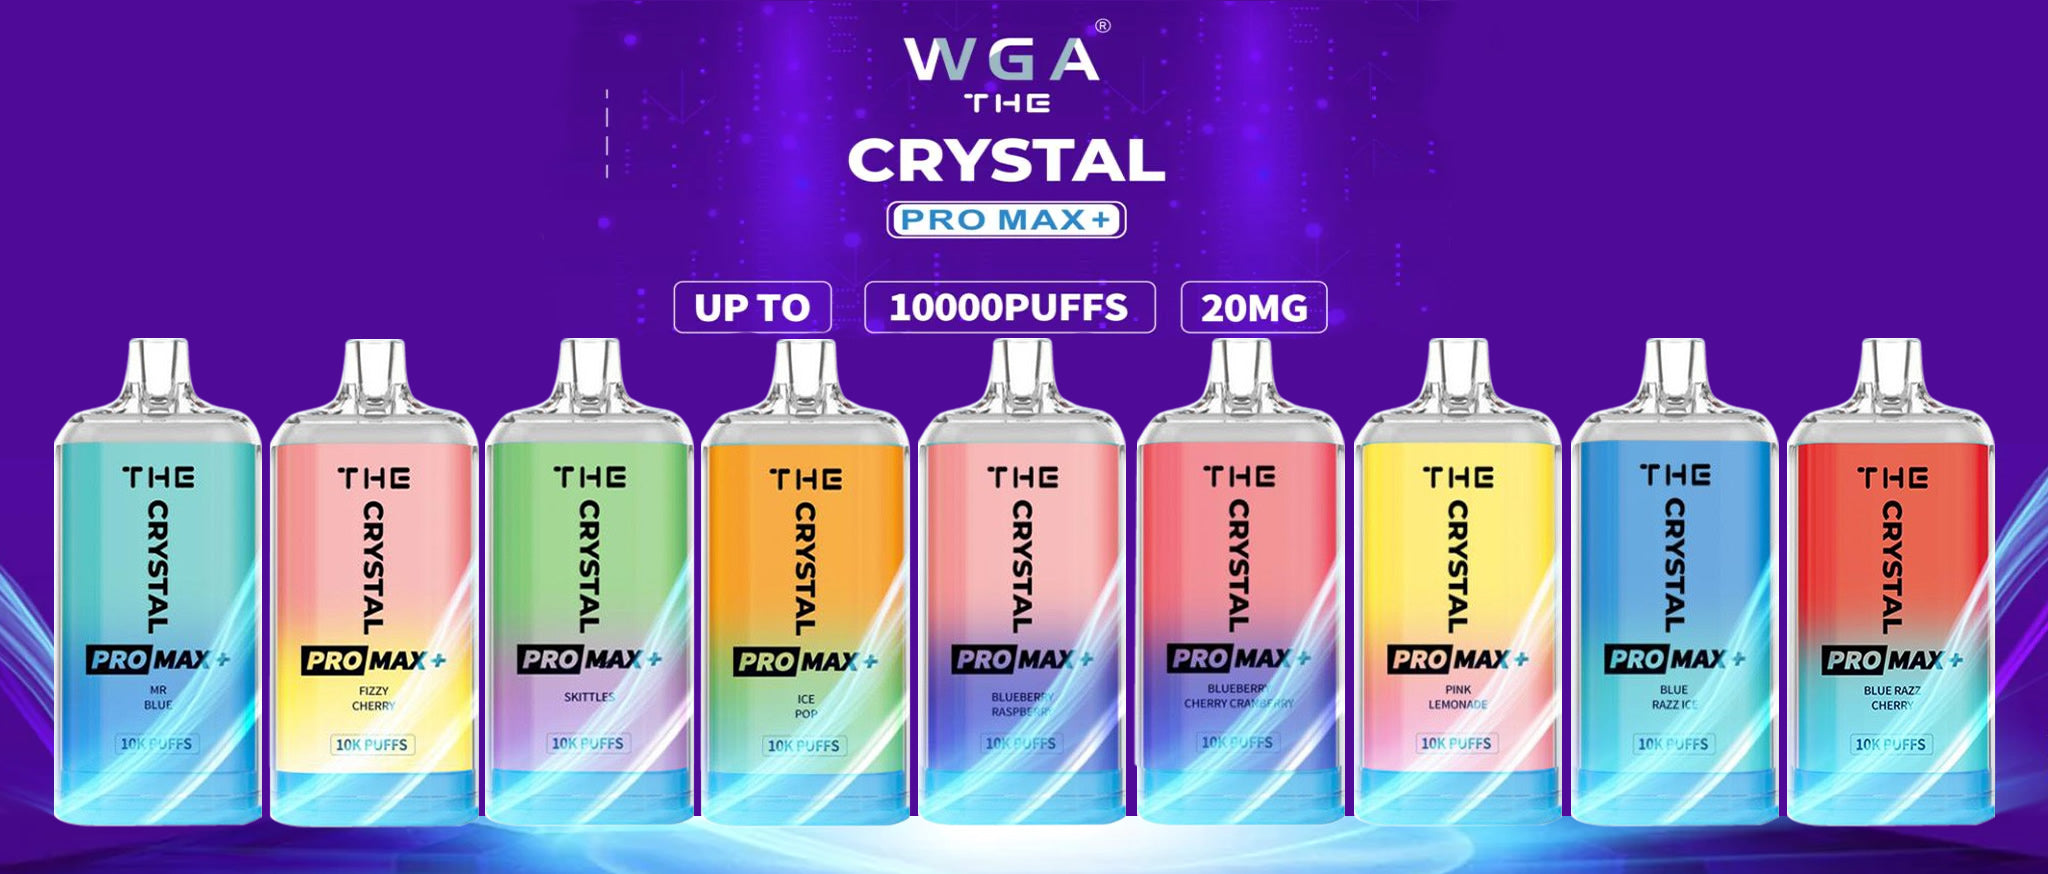 WGA The Crystal Pro Max + 10000